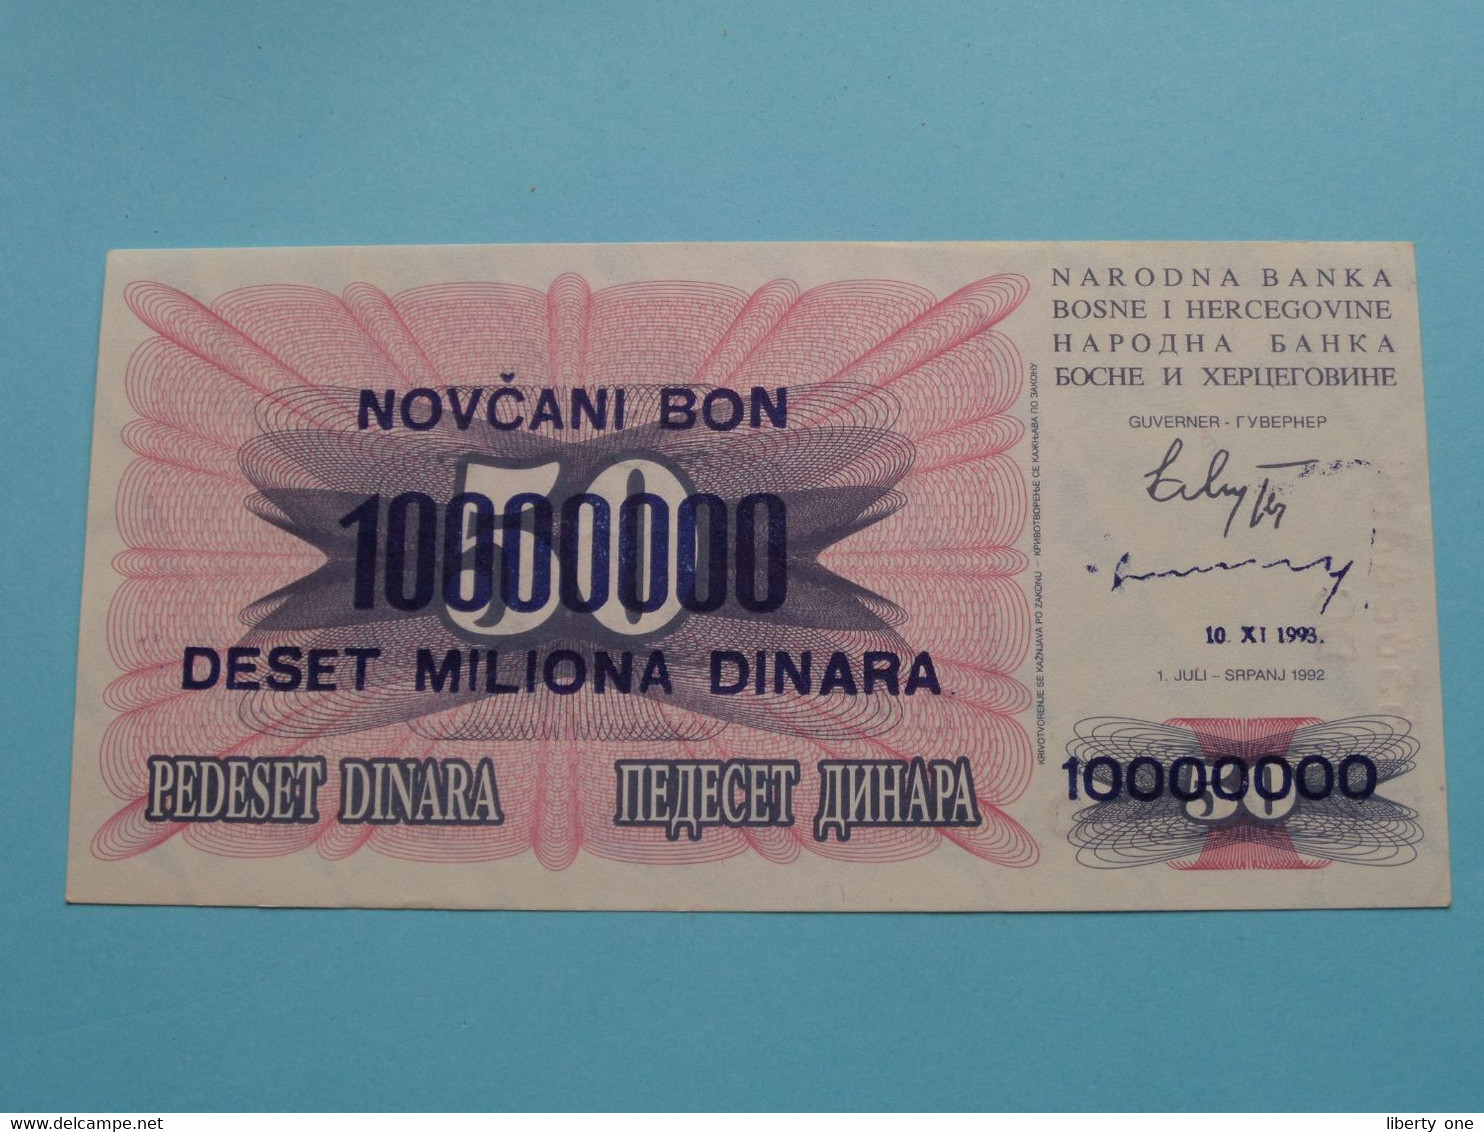 10 000 000 Deset Miliona Dinara ( FD55828824 / DC ) Bosne I Hercegovine - 10-XI-1993 ( Voir / See > Scans ) UNC ! - Bosnia Y Herzegovina